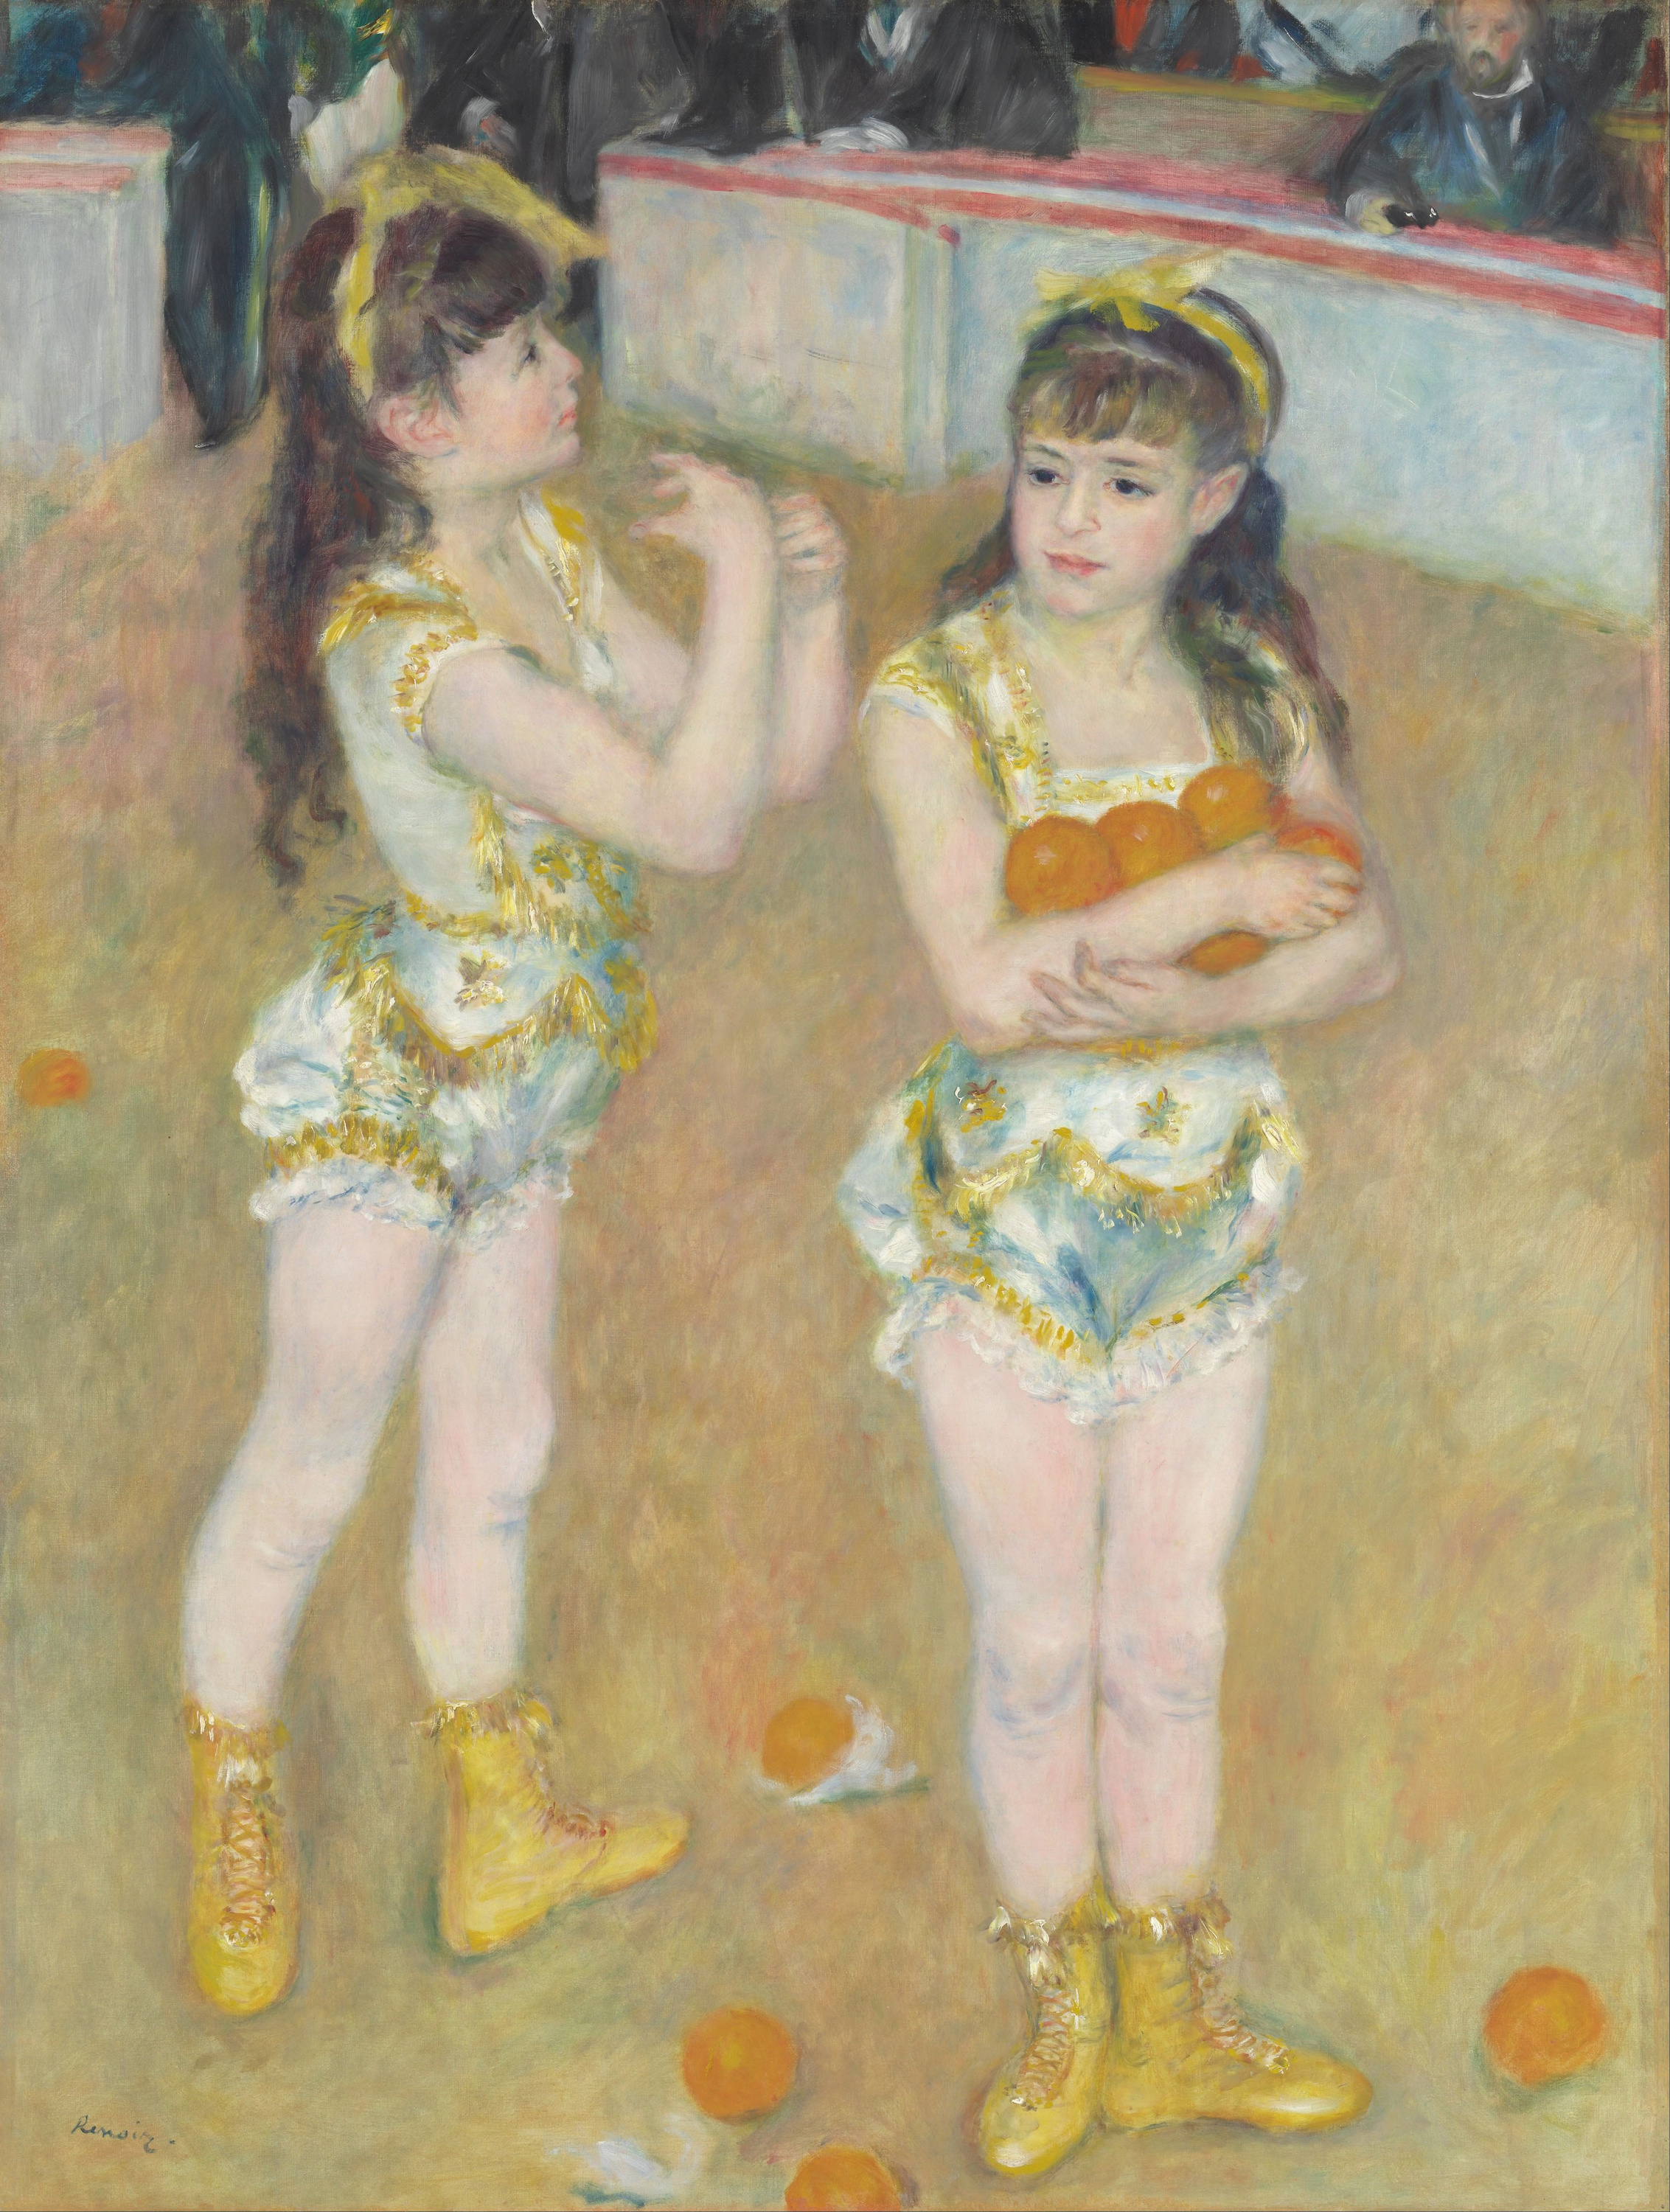 بهلوانيتان في سيرك فيرناندو (فرانشيسكا وأنجلينا فارتنبيرغ) by Pierre-Auguste Renoir - 1879 - 131.2 × 99.2 سم 